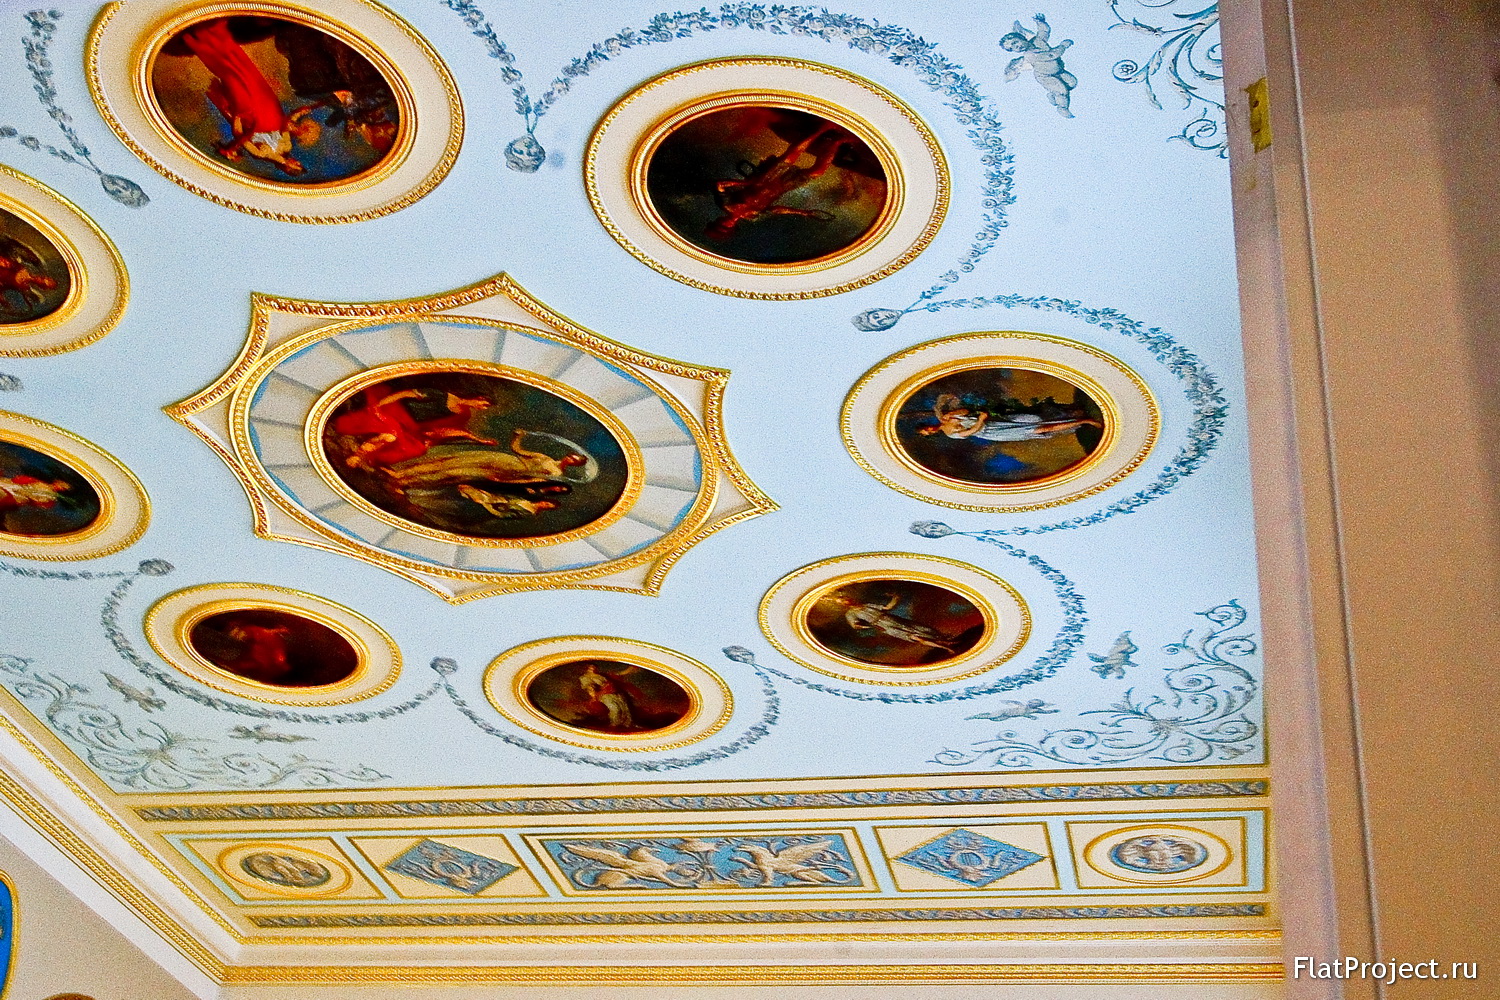 The Catherine Palace interiors – photo 231